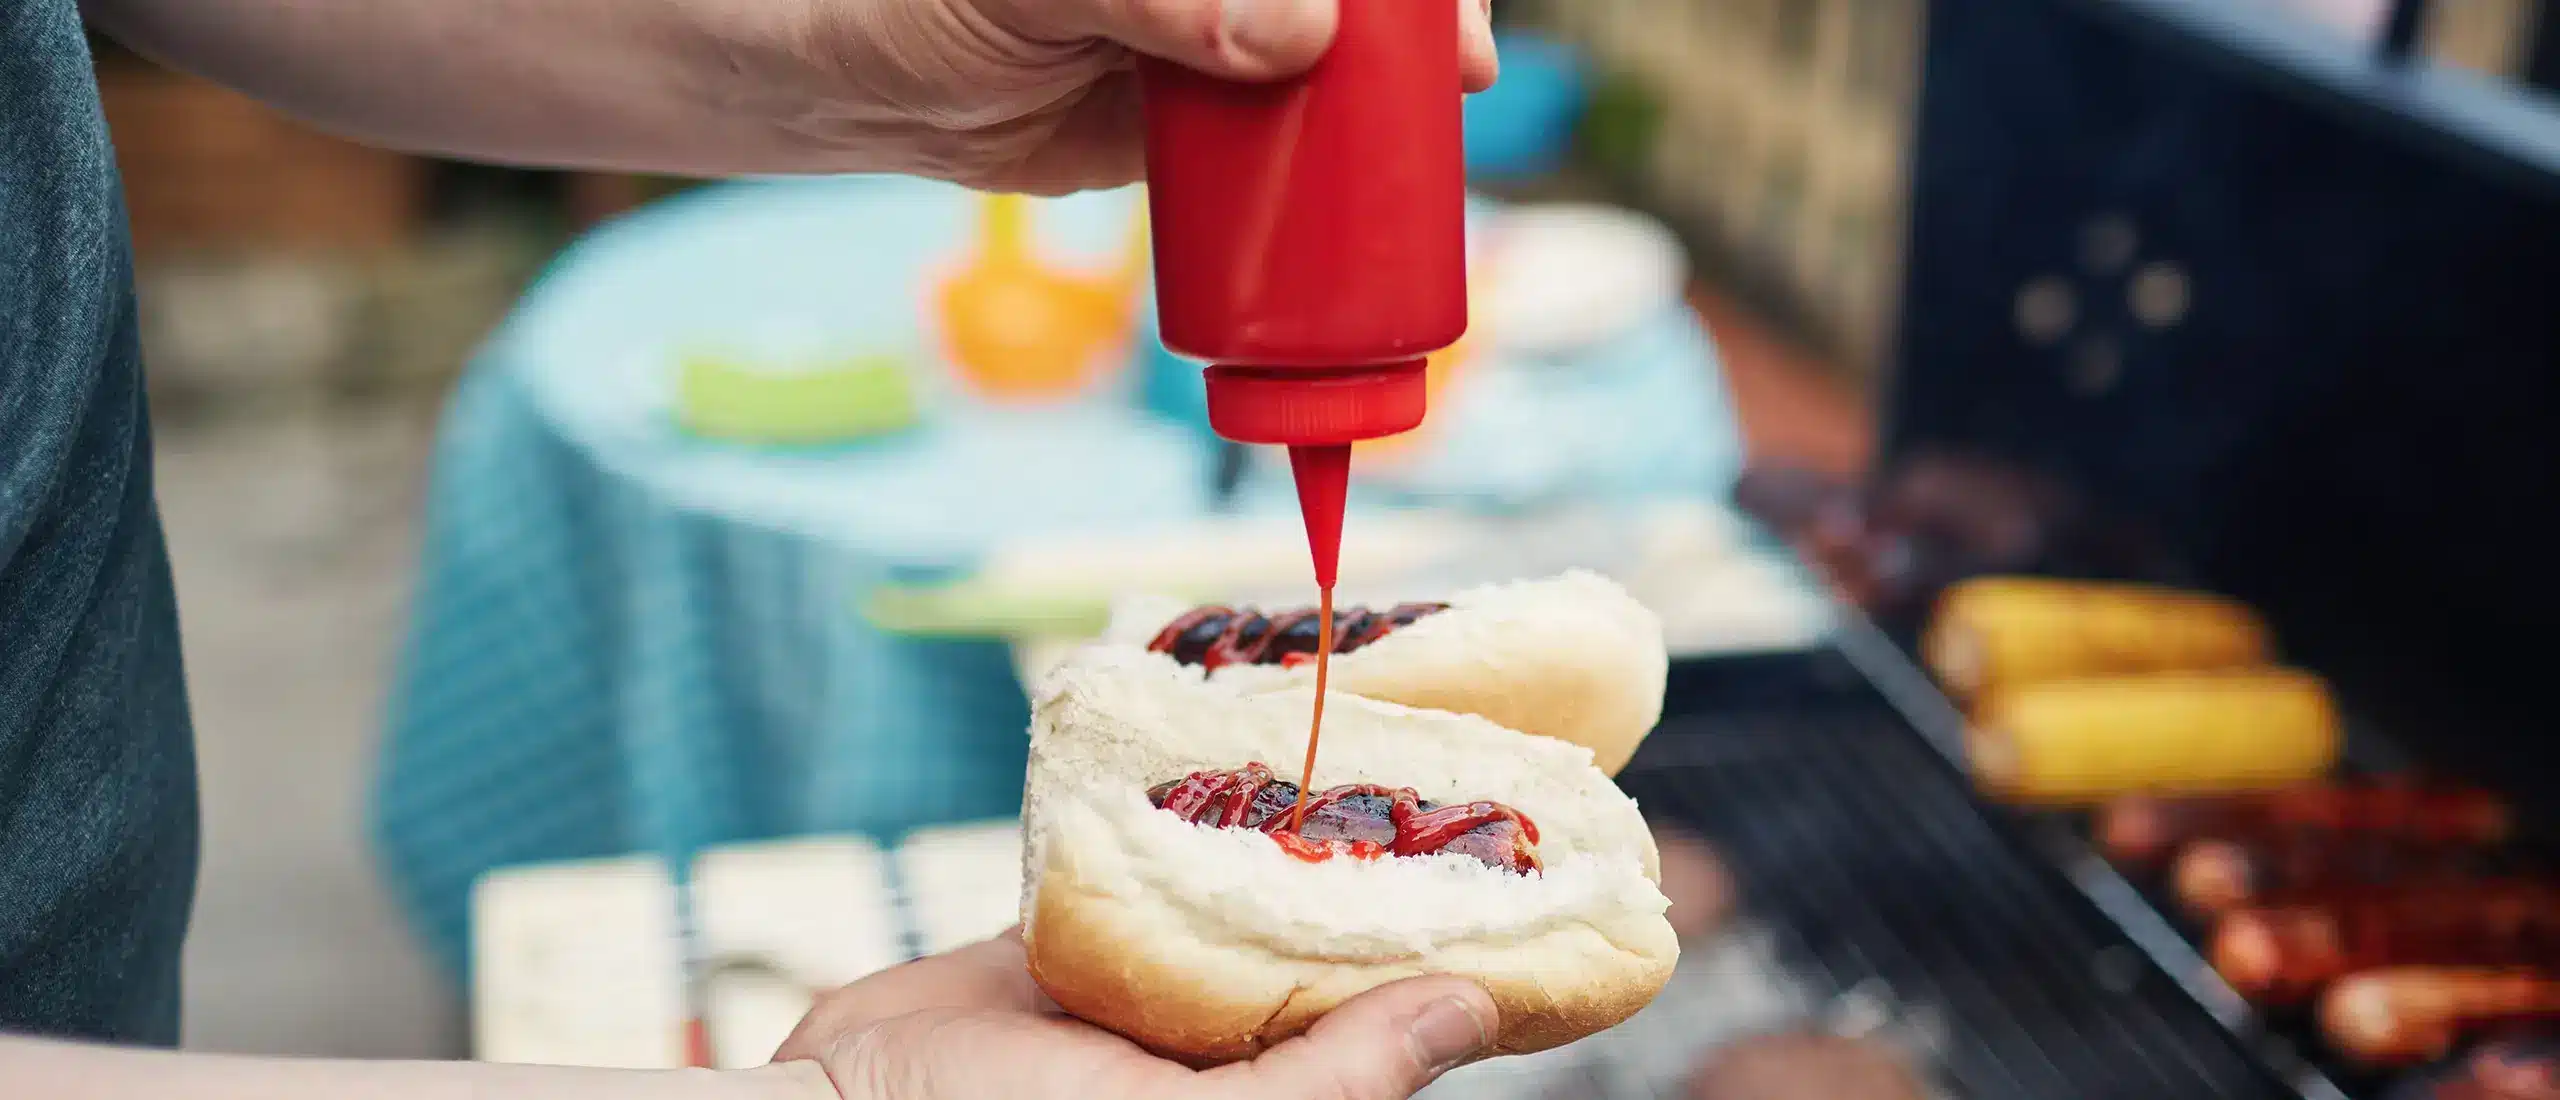 Man squirting ketchup on a hotdog